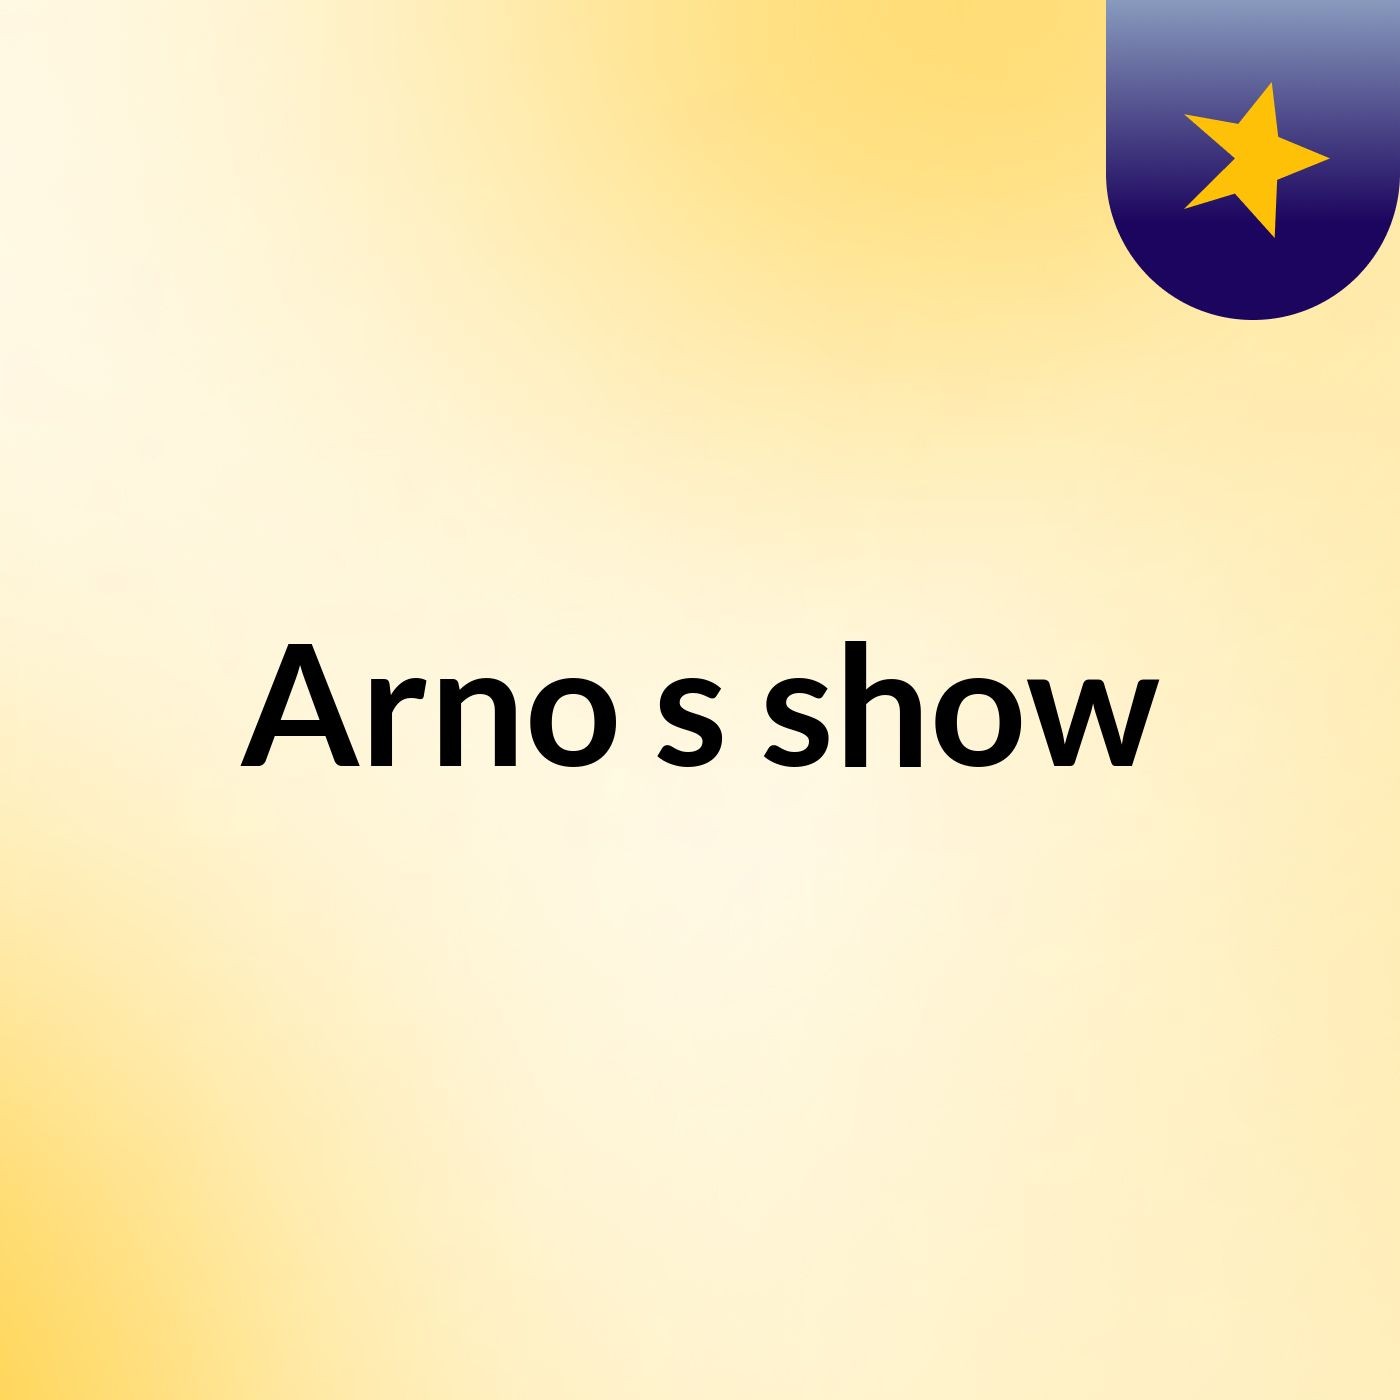 Arno's show